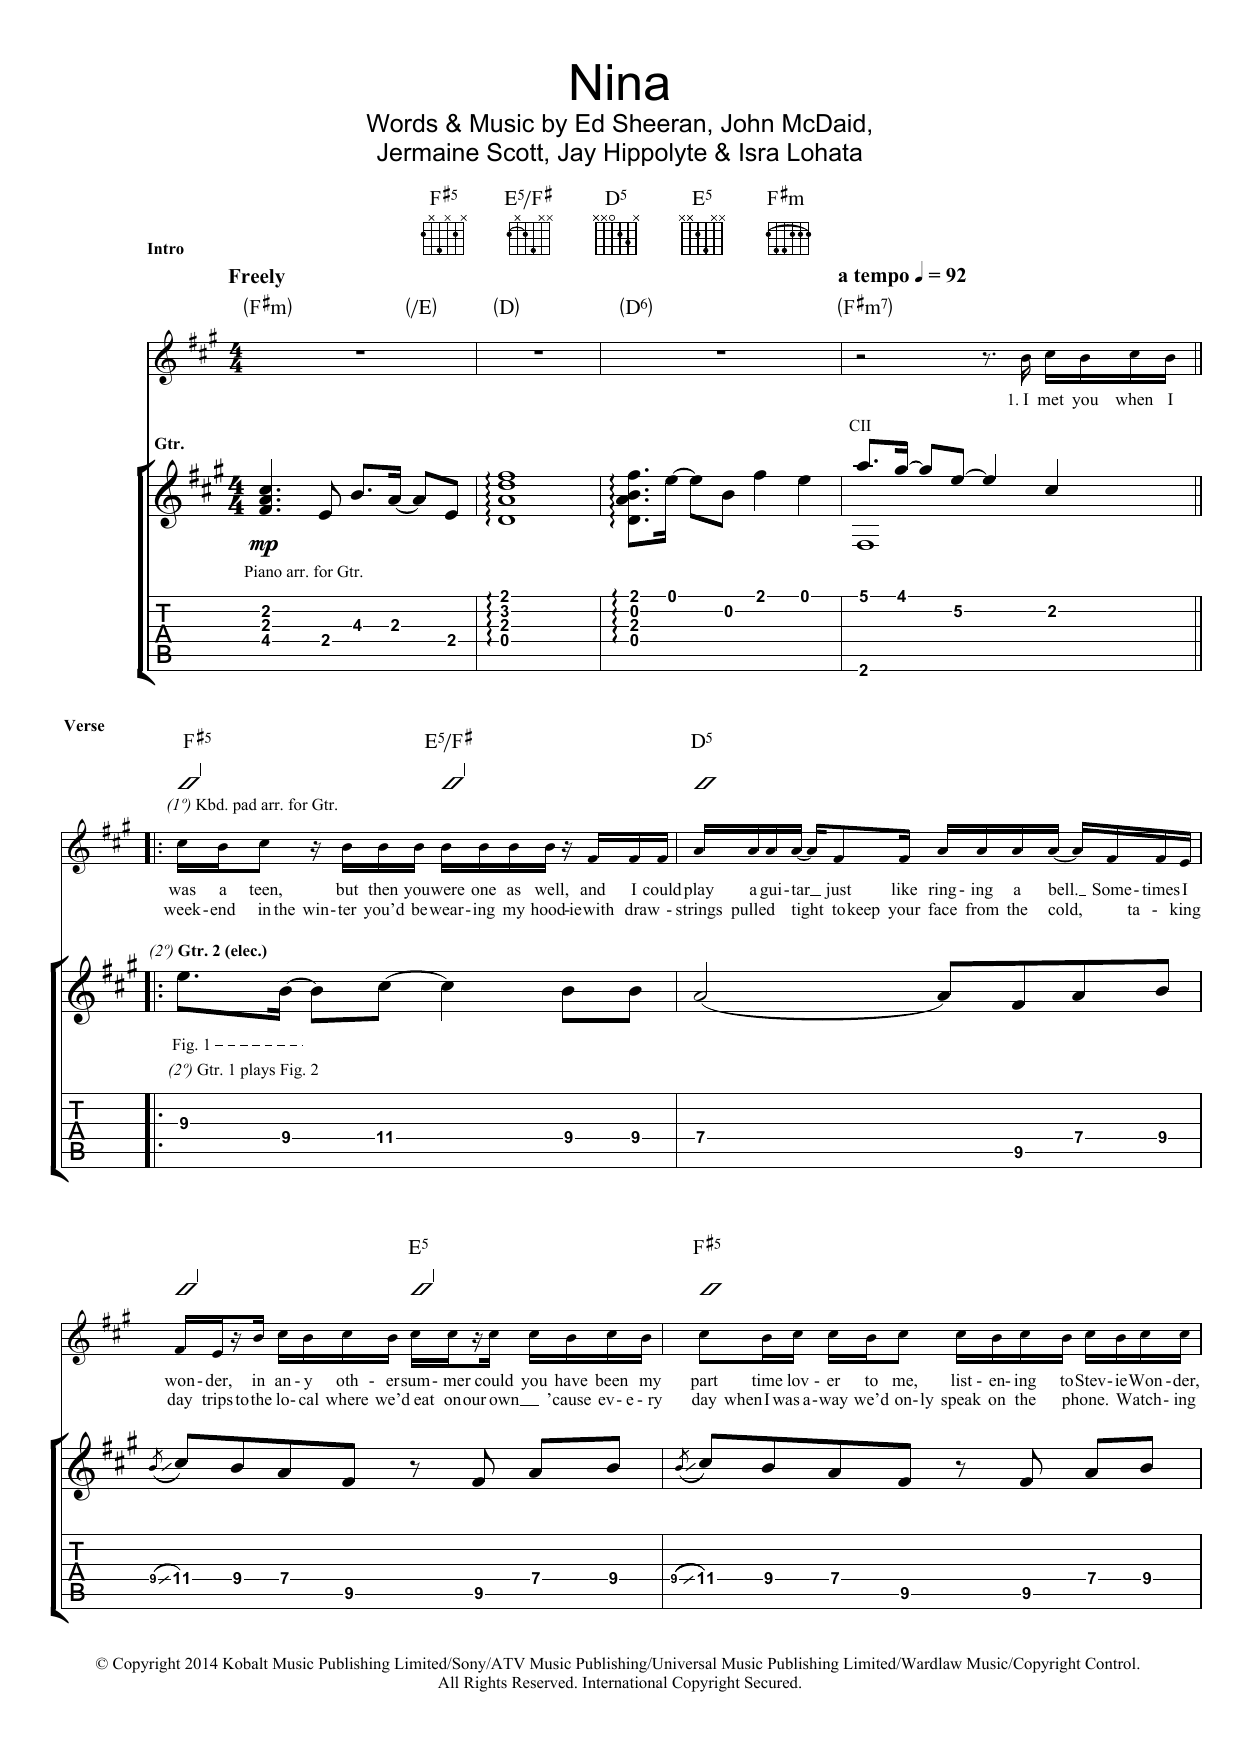 Ed Sheeran Nina Sheet Music Notes & Chords for Guitar Tab - Download or Print PDF